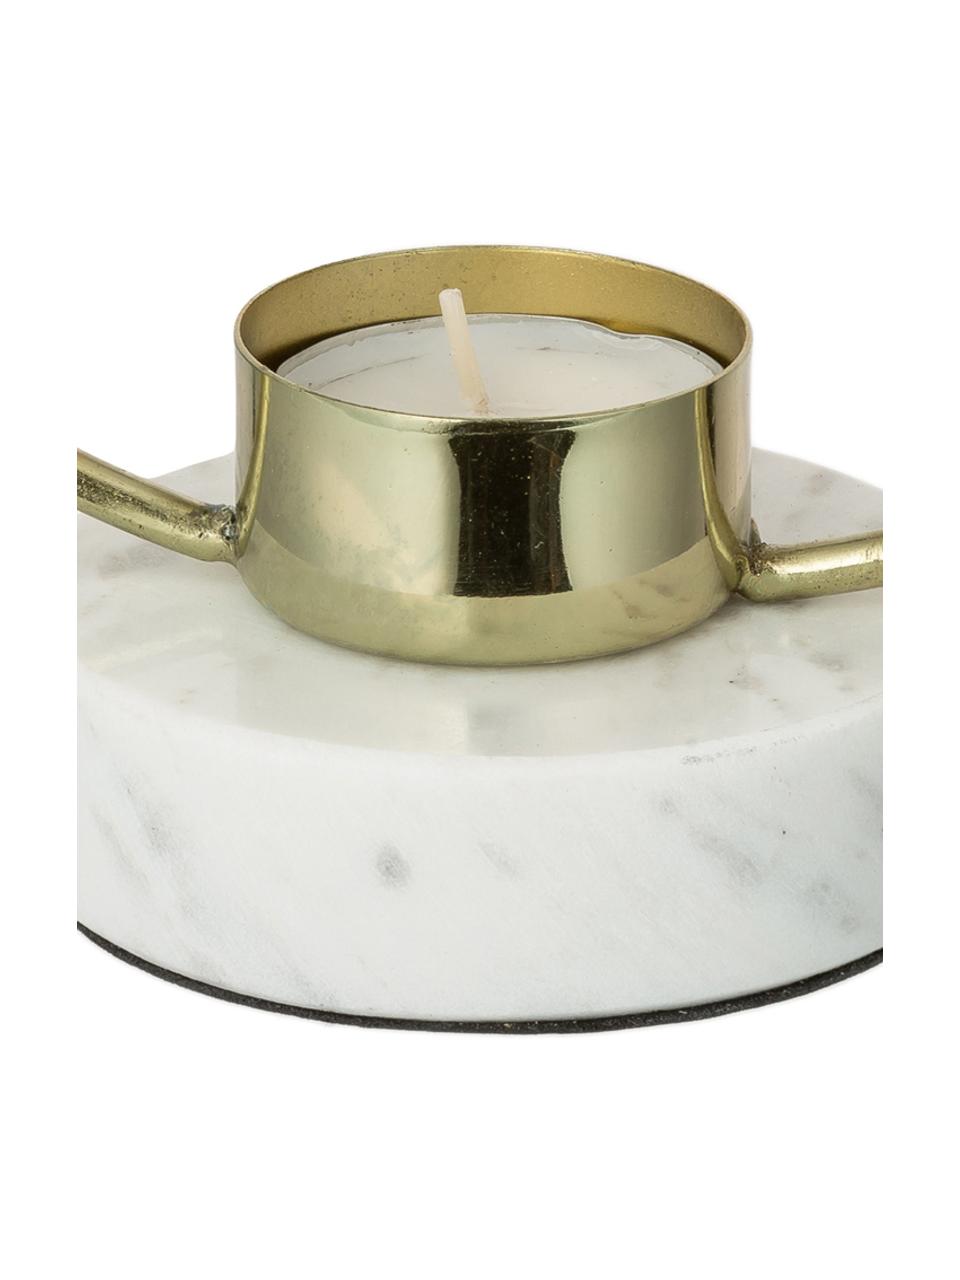 Candeliere Golden Ring, Dorato , bianco, Larg. 18 x Alt. 20 cm